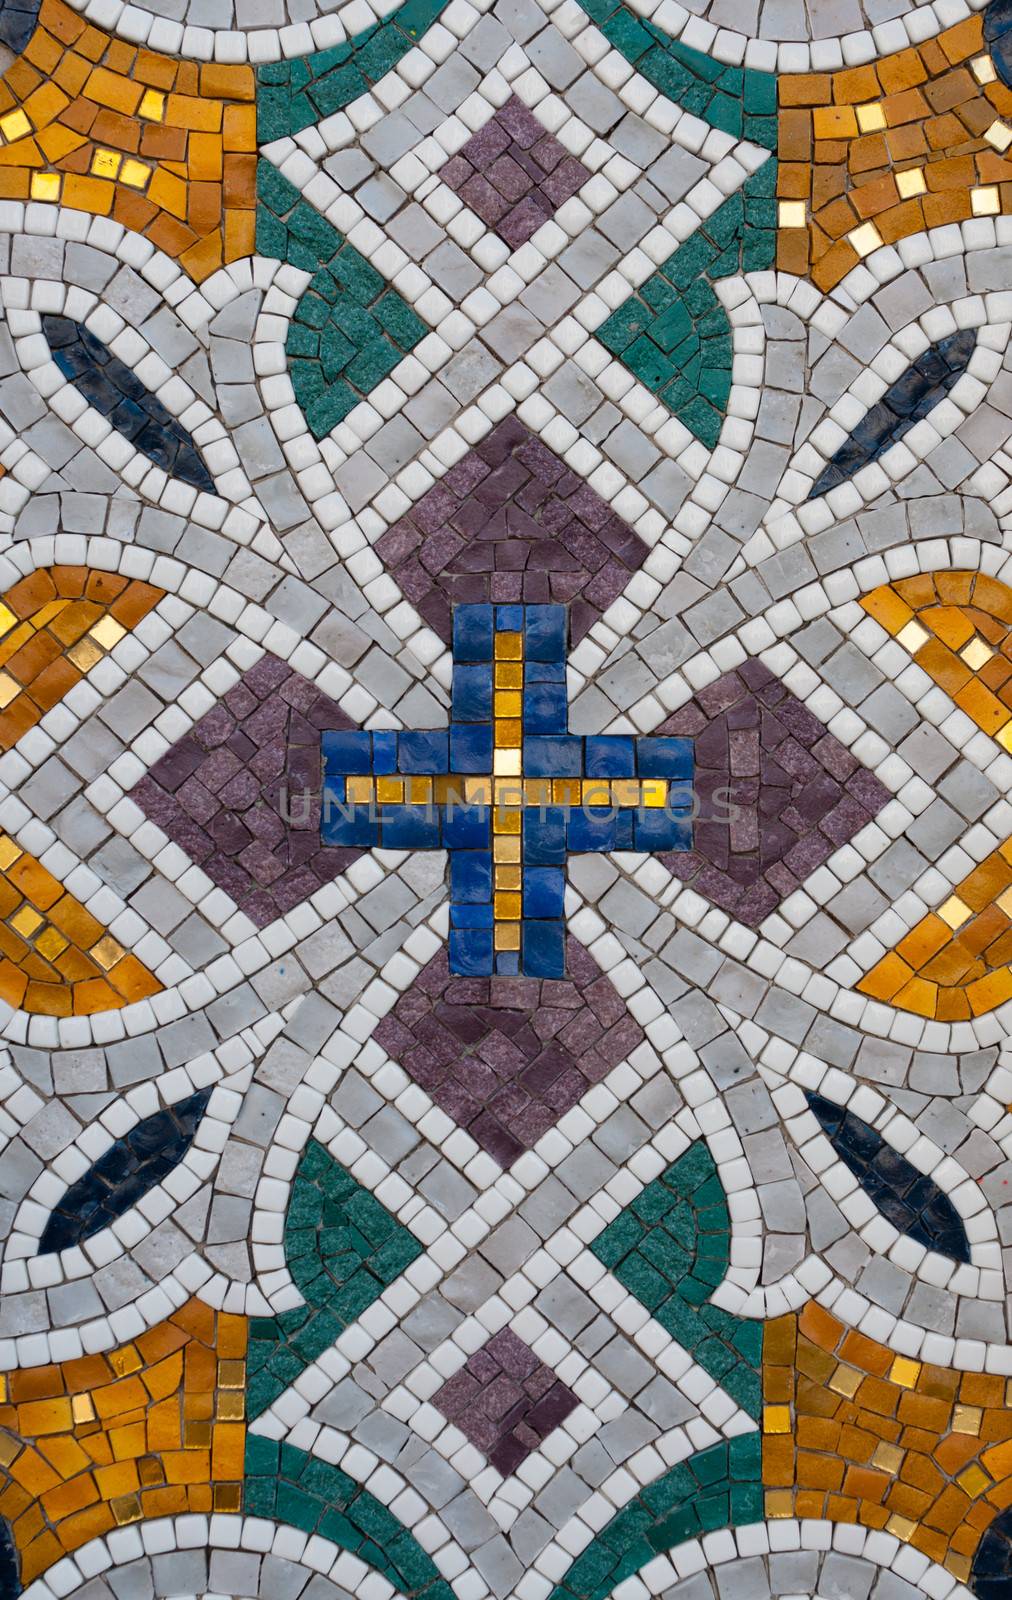 Abstract pattern of stone mosaics.